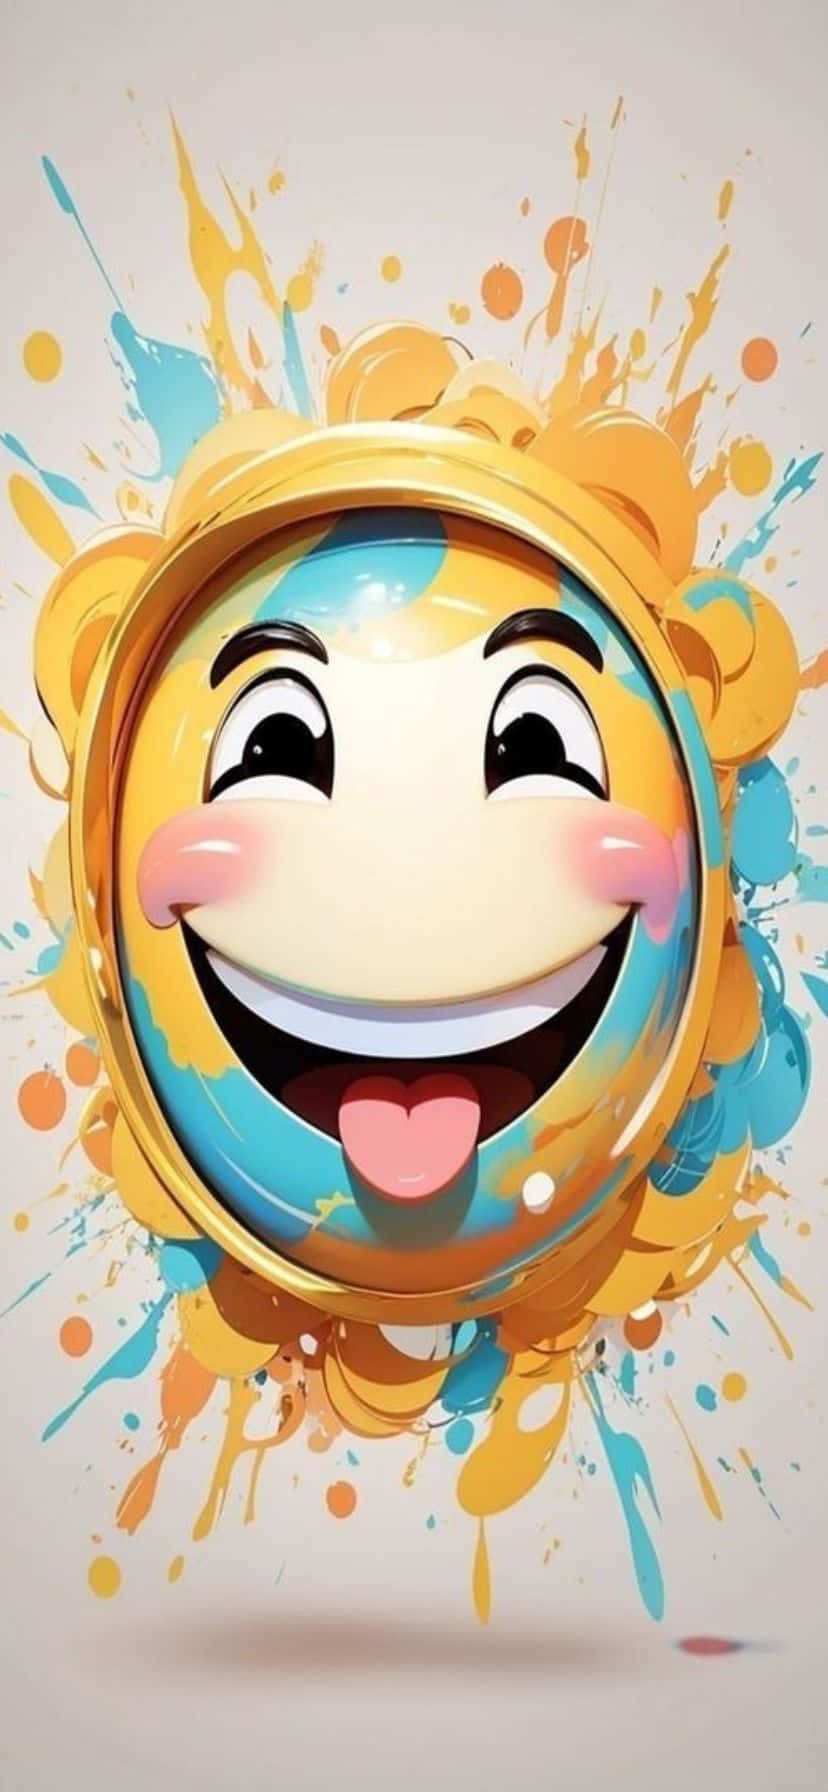 Exploding Laughter Emoji Art Wallpaper